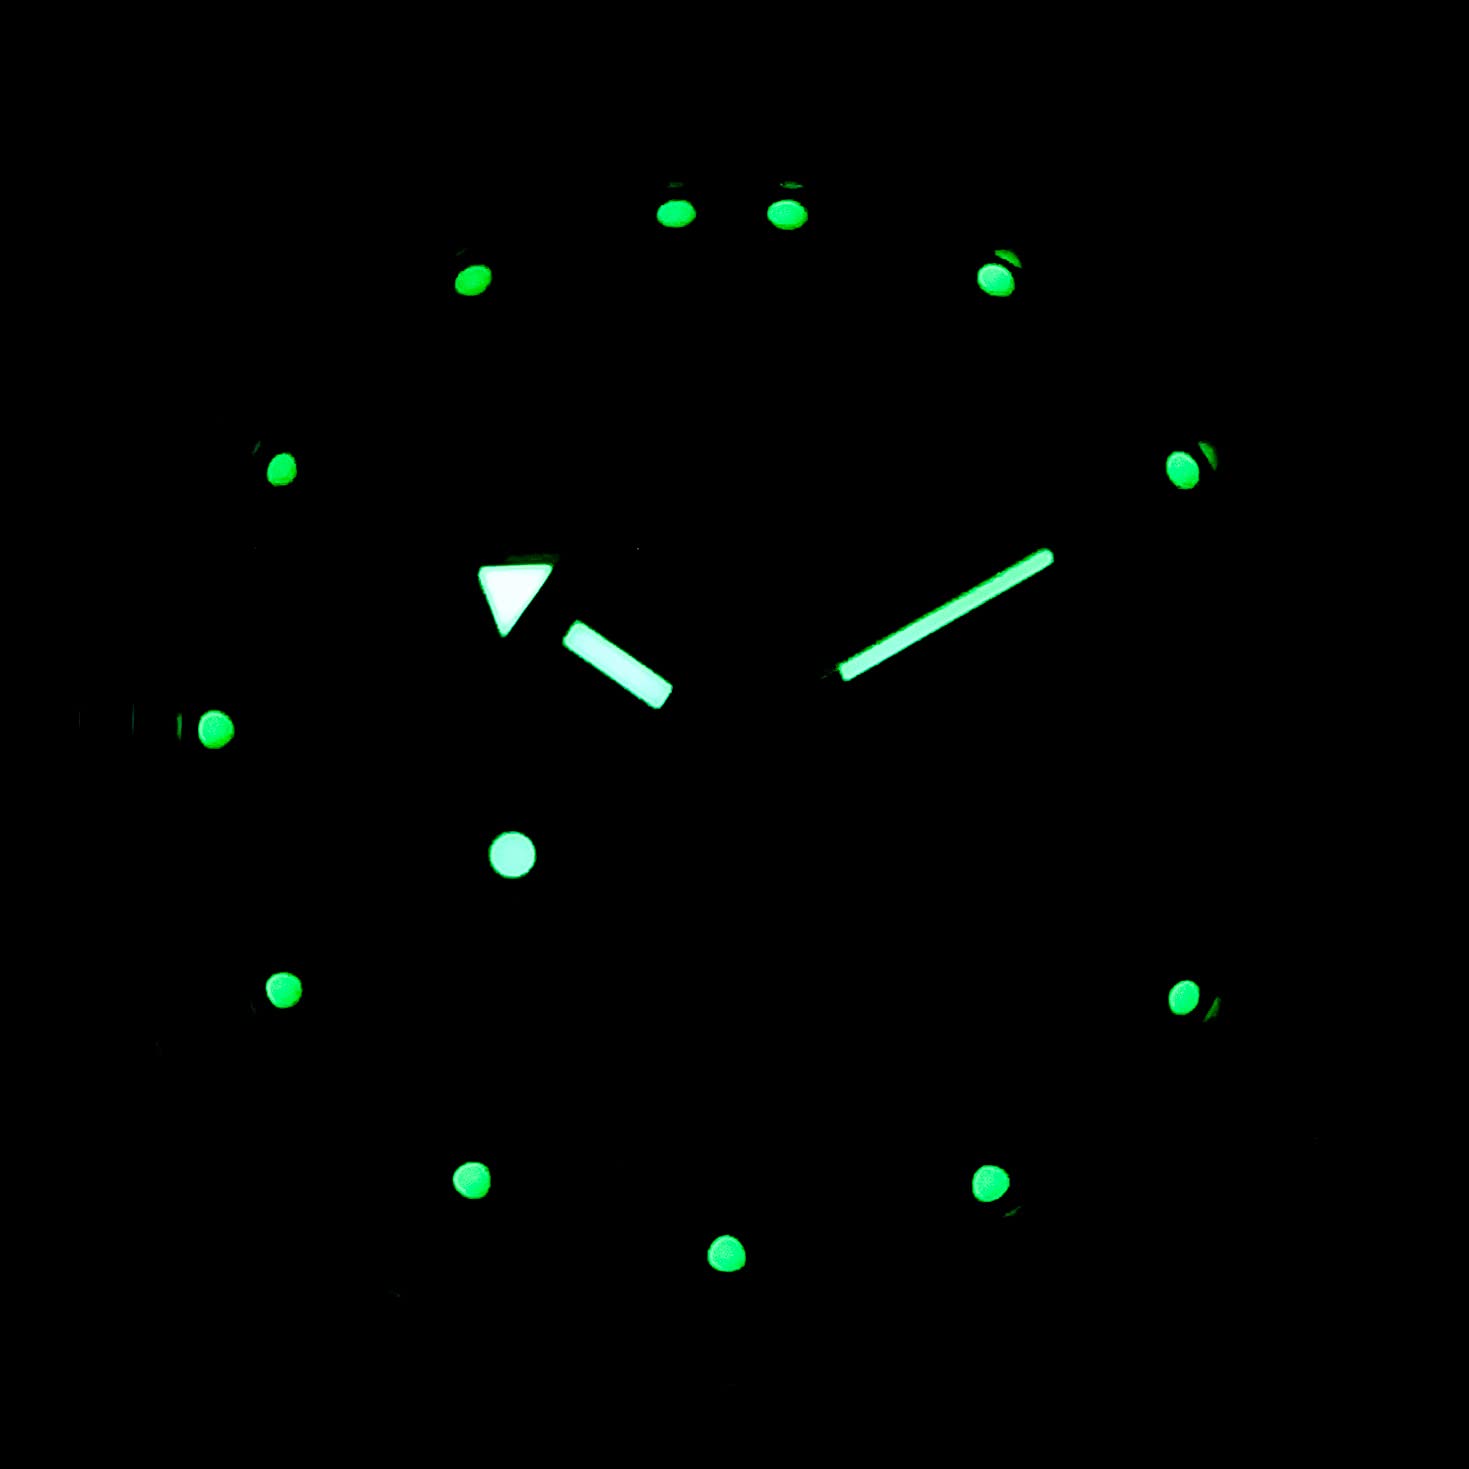 VOSTOK | Submarine Сaptain Amphibian Automatic Self-Winding 40mm Diver Wrist Watch | WR 200m | Amphibia 420831 | Black Blue Dial Mechanical Watch | Luminous dots